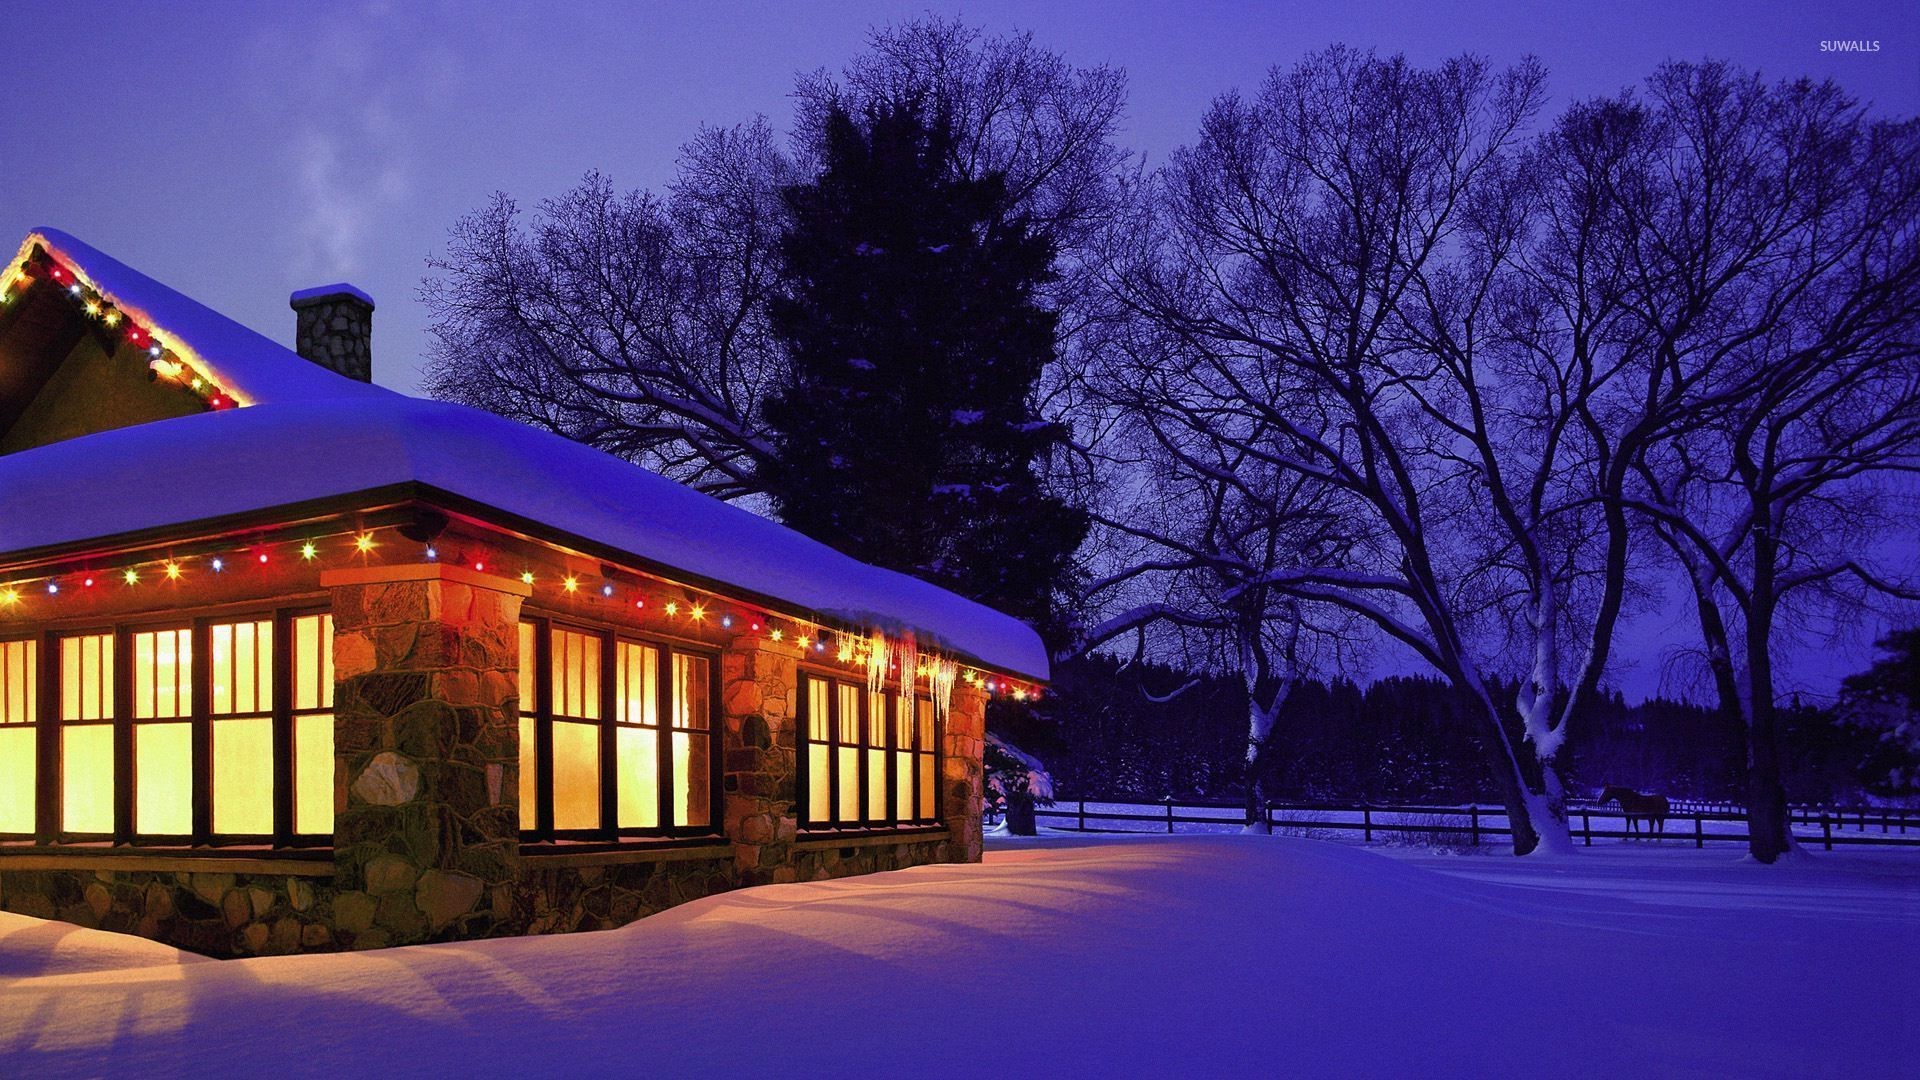 1920x1080 Christmas lights decorating the snowy house wallpaper  jpg